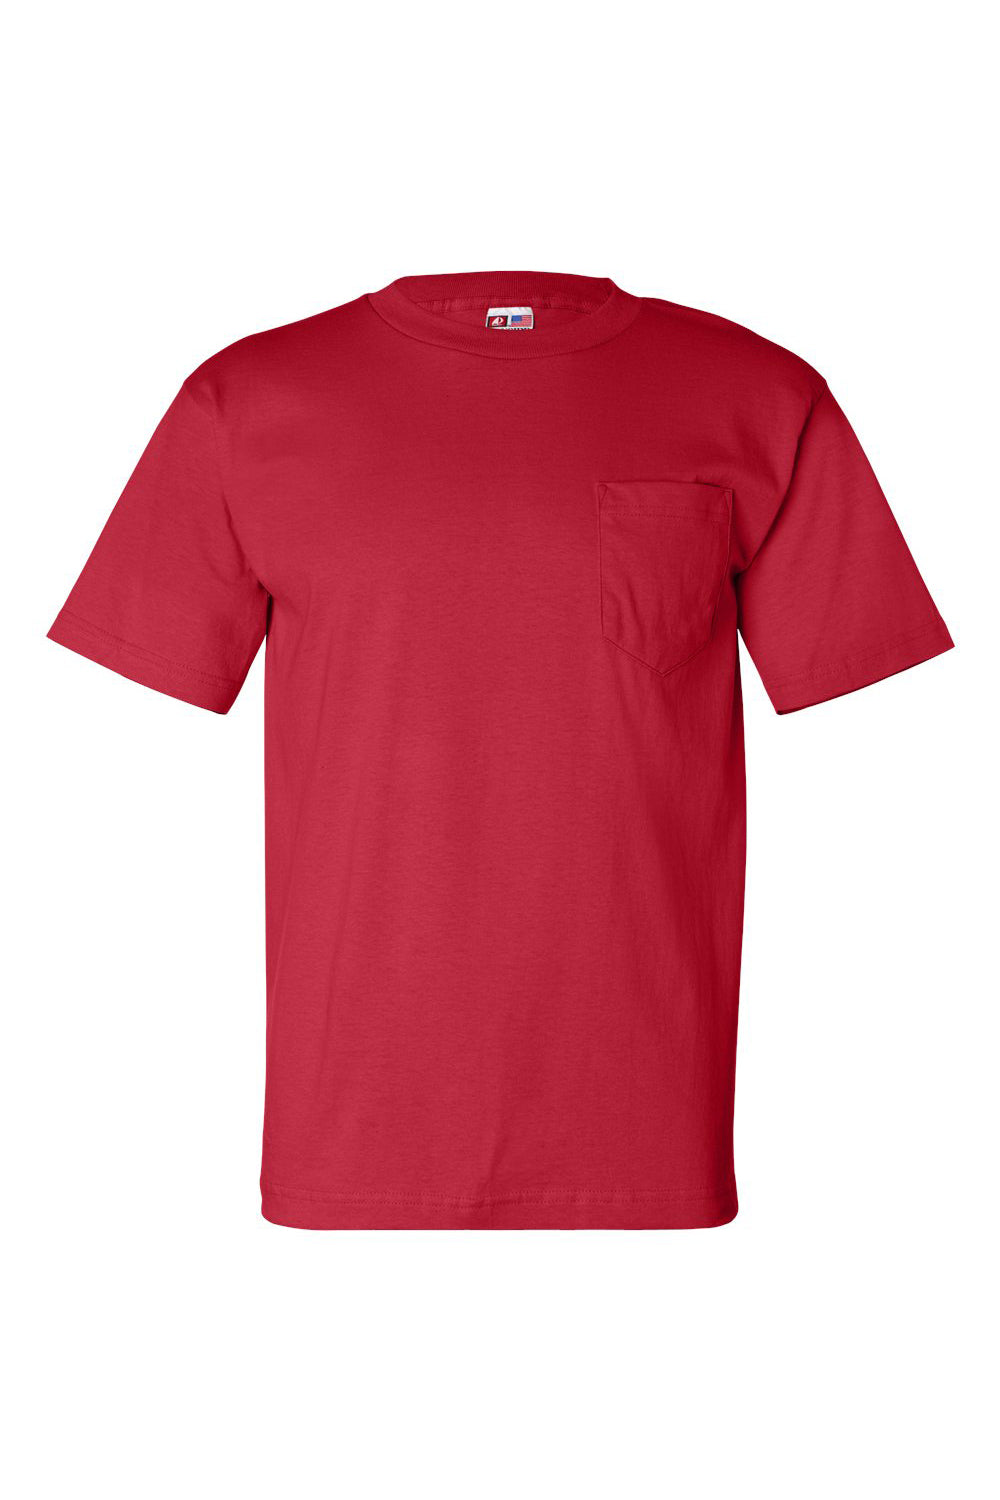 Bayside BA7100 Mens USA Made Short Sleeve Crewneck T-Shirt w/ Pocket Red Flat Front